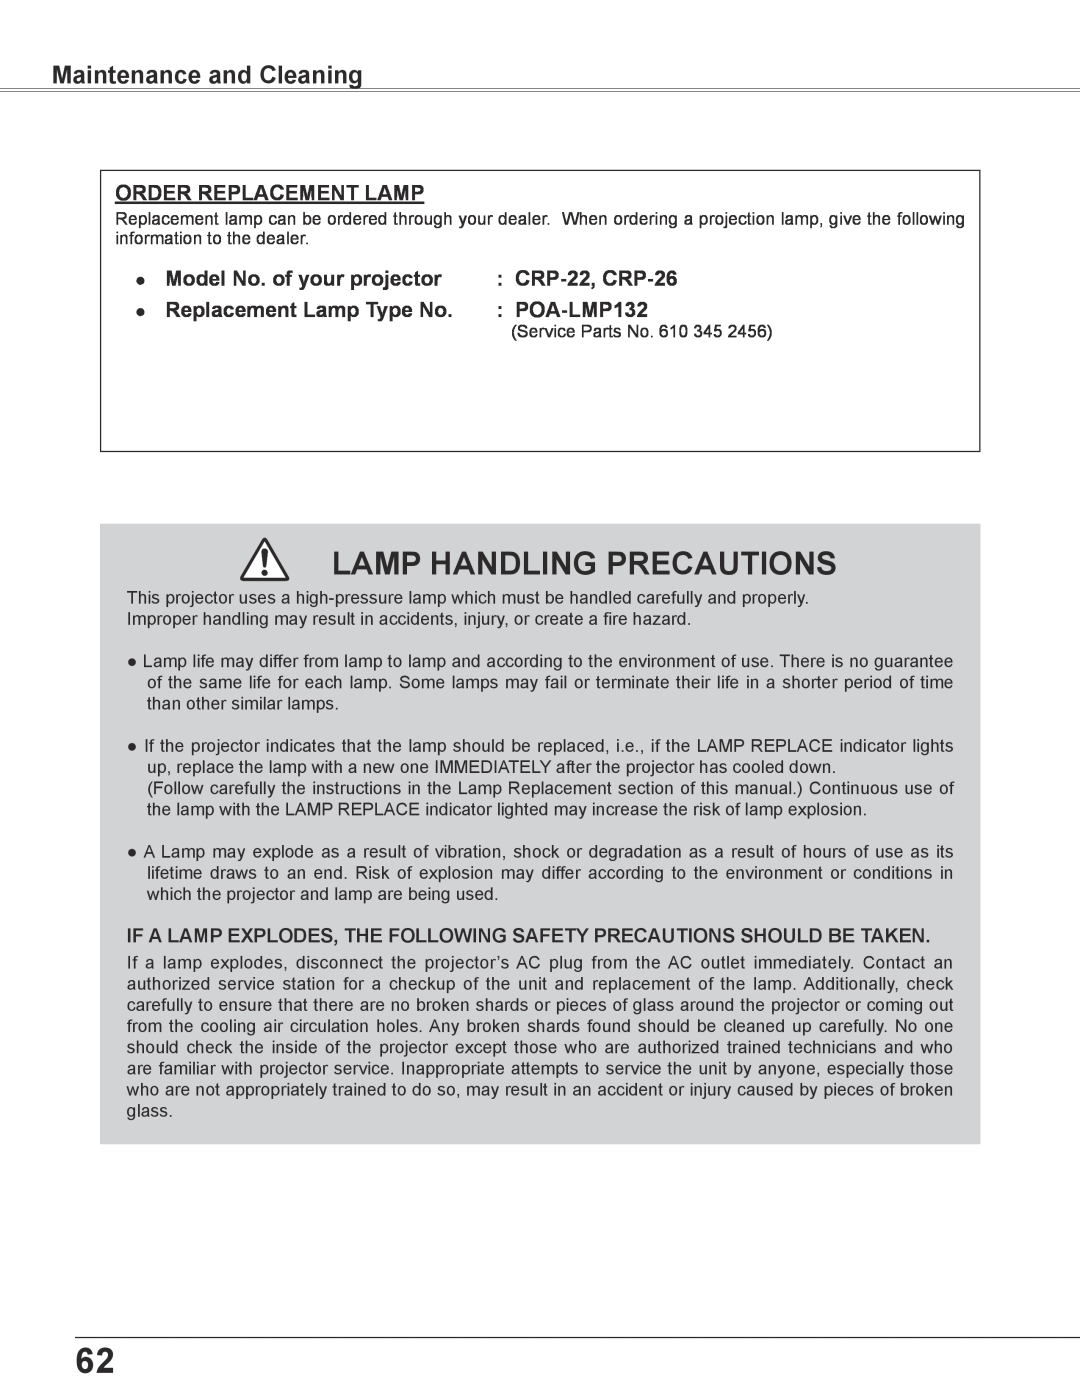 Elmo Lamp Handling Precautions, Order Replacement Lamp, Model No. of your projector, CRP-22, CRP-26, POA-LMP132 